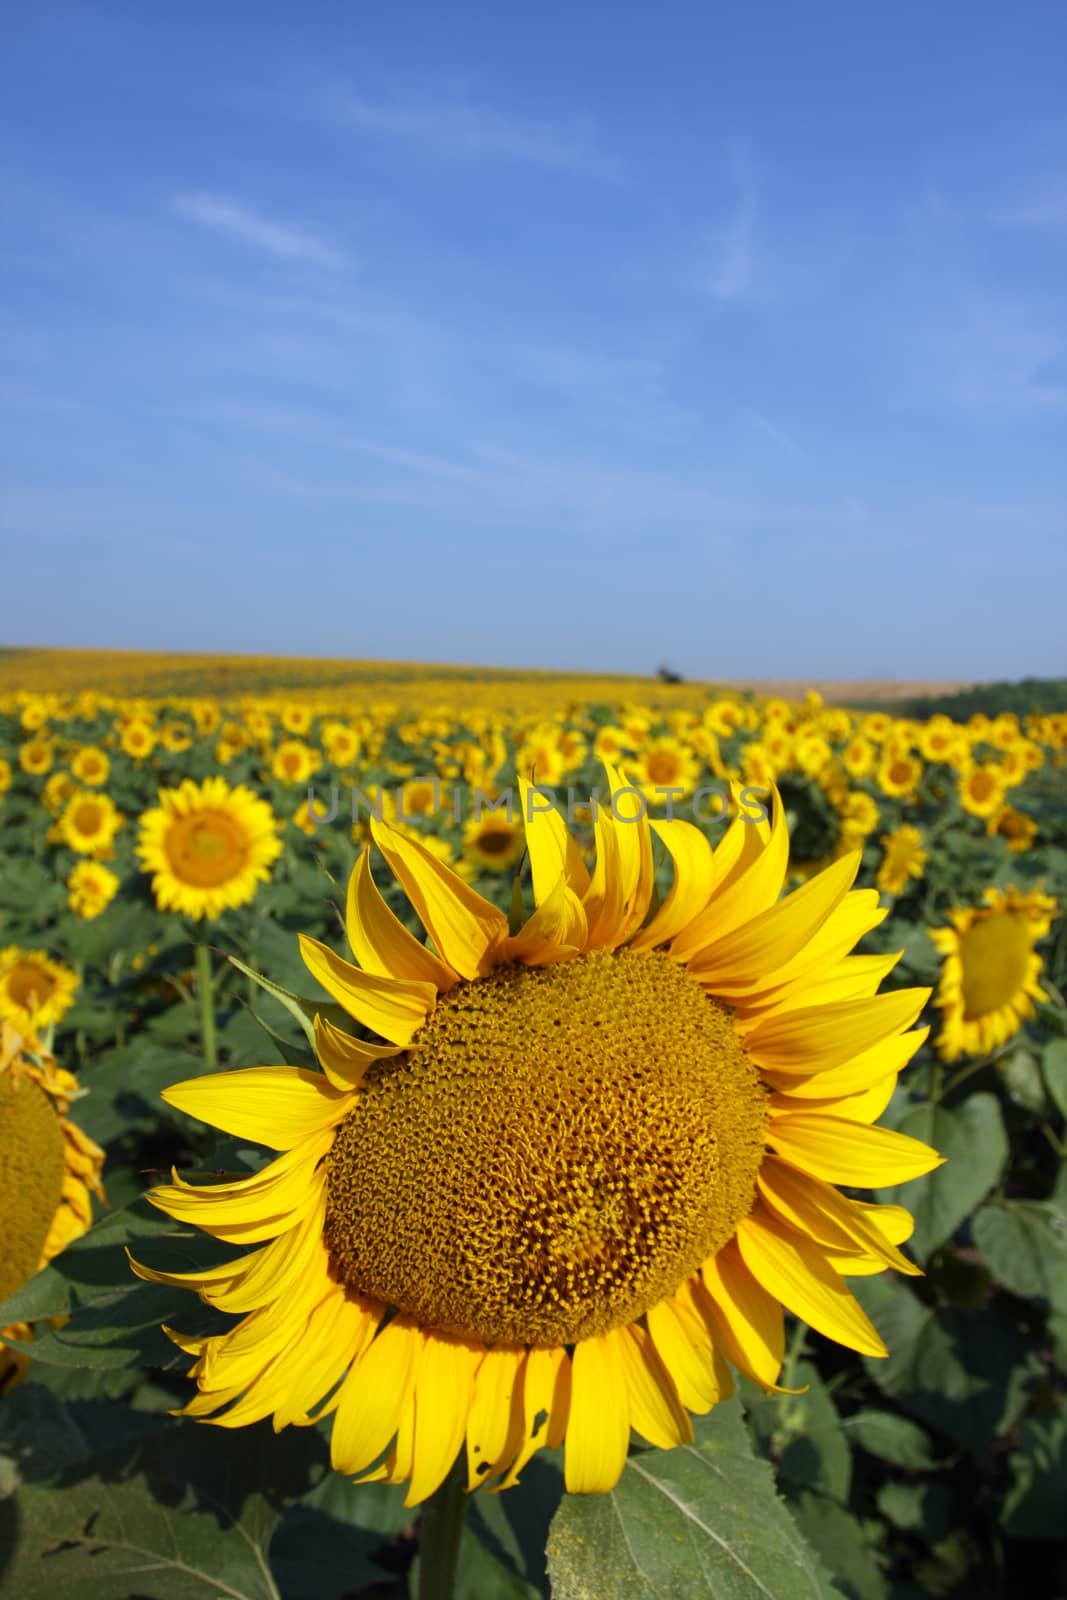 field of sunflowers and blue sun sky by nemar74